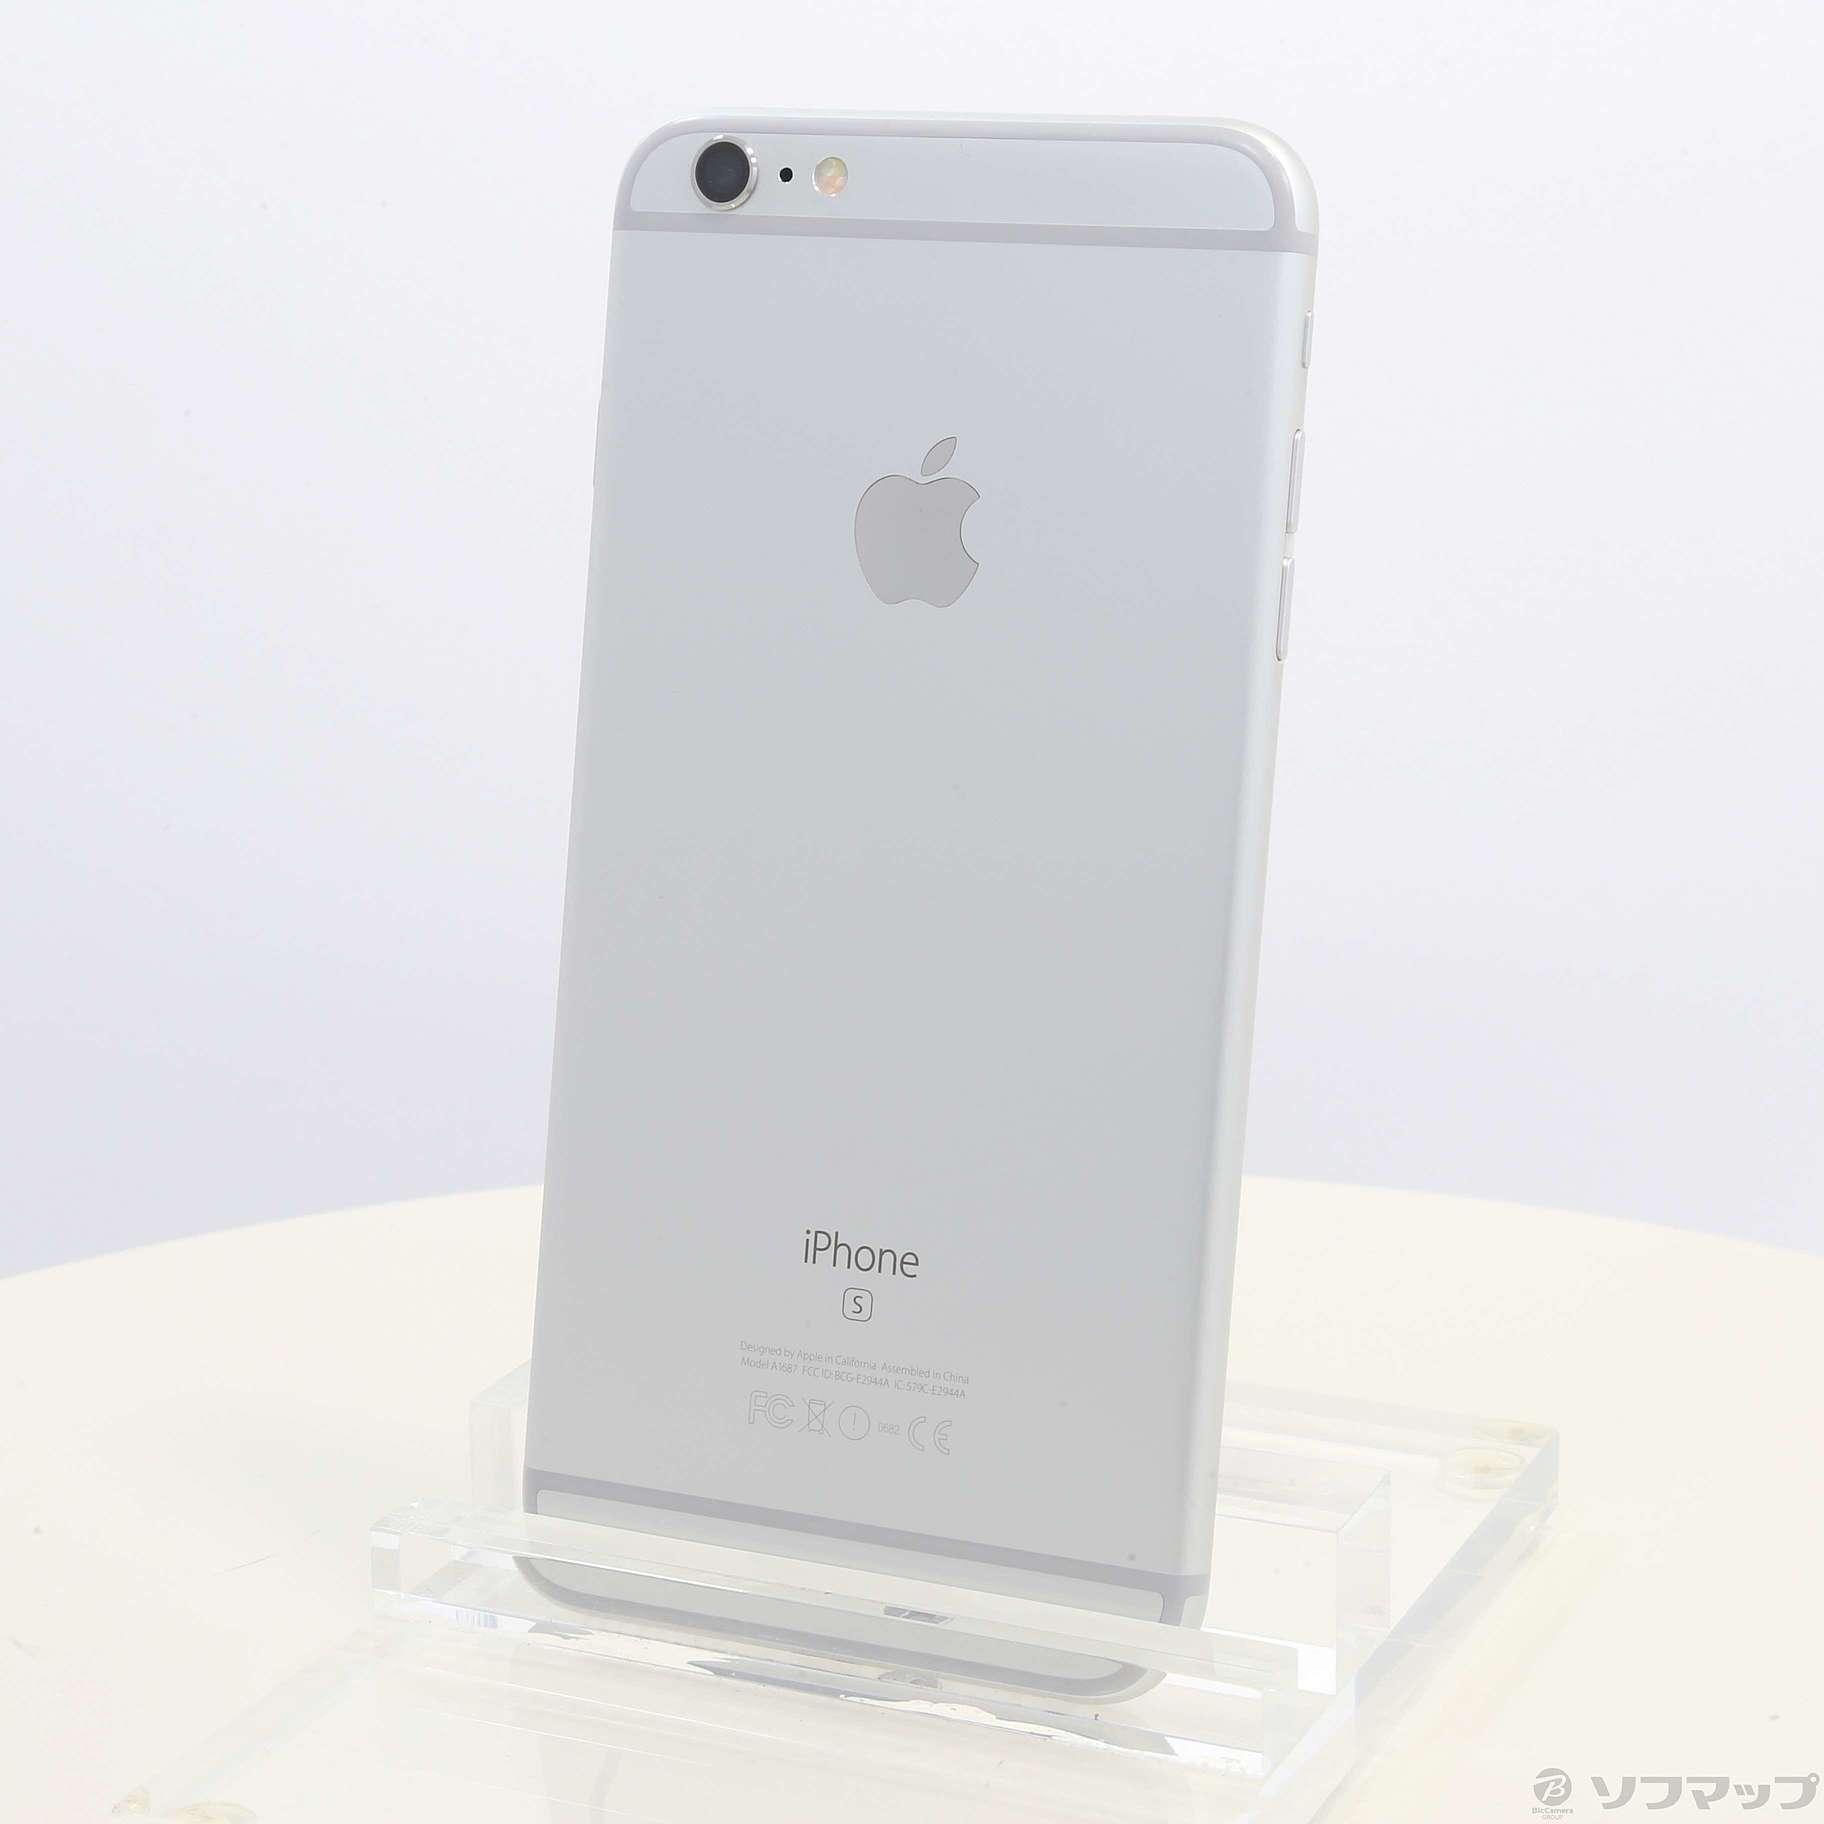 iPhone6s plus 16gb SoftBank